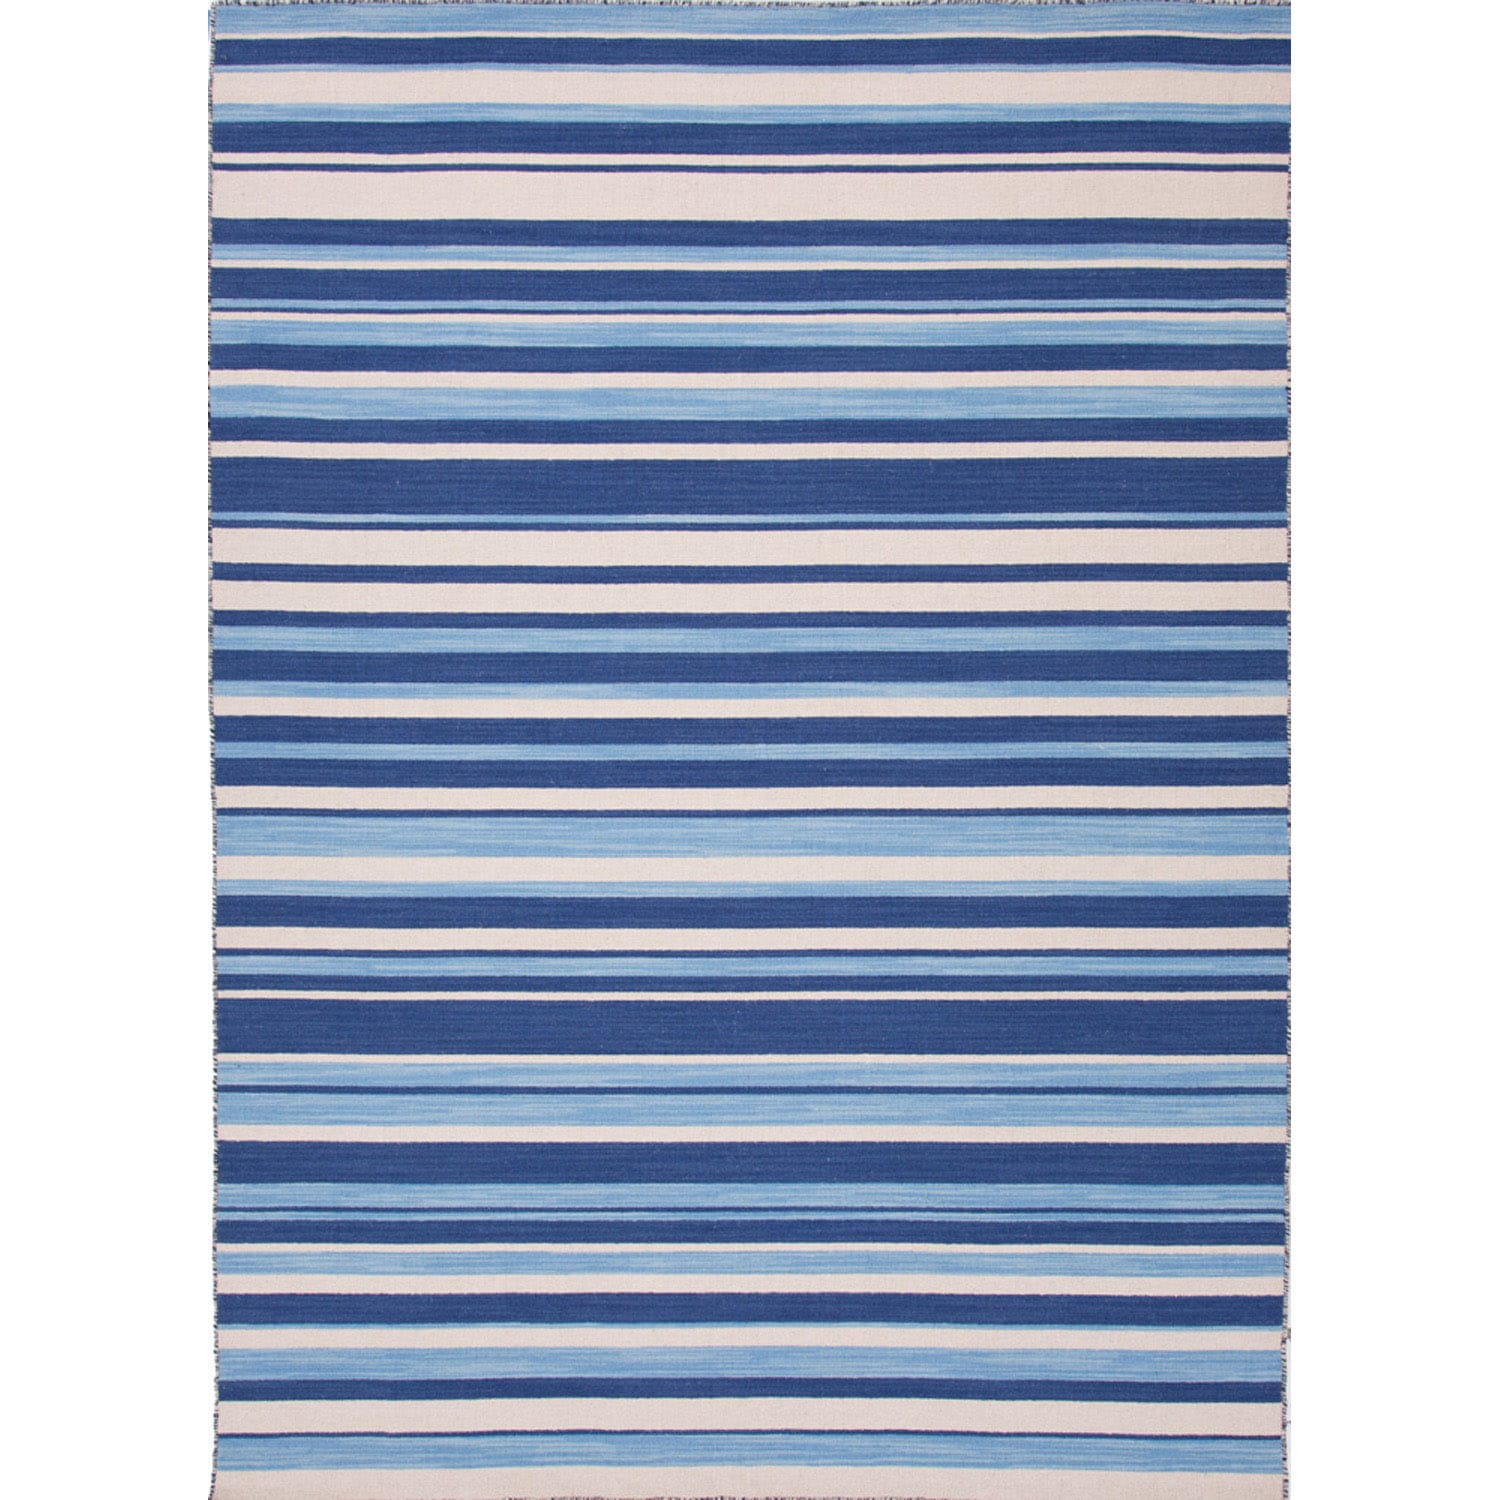 Handmade Flat Weave Stripe Pattern Blue Rug (5 X 8)